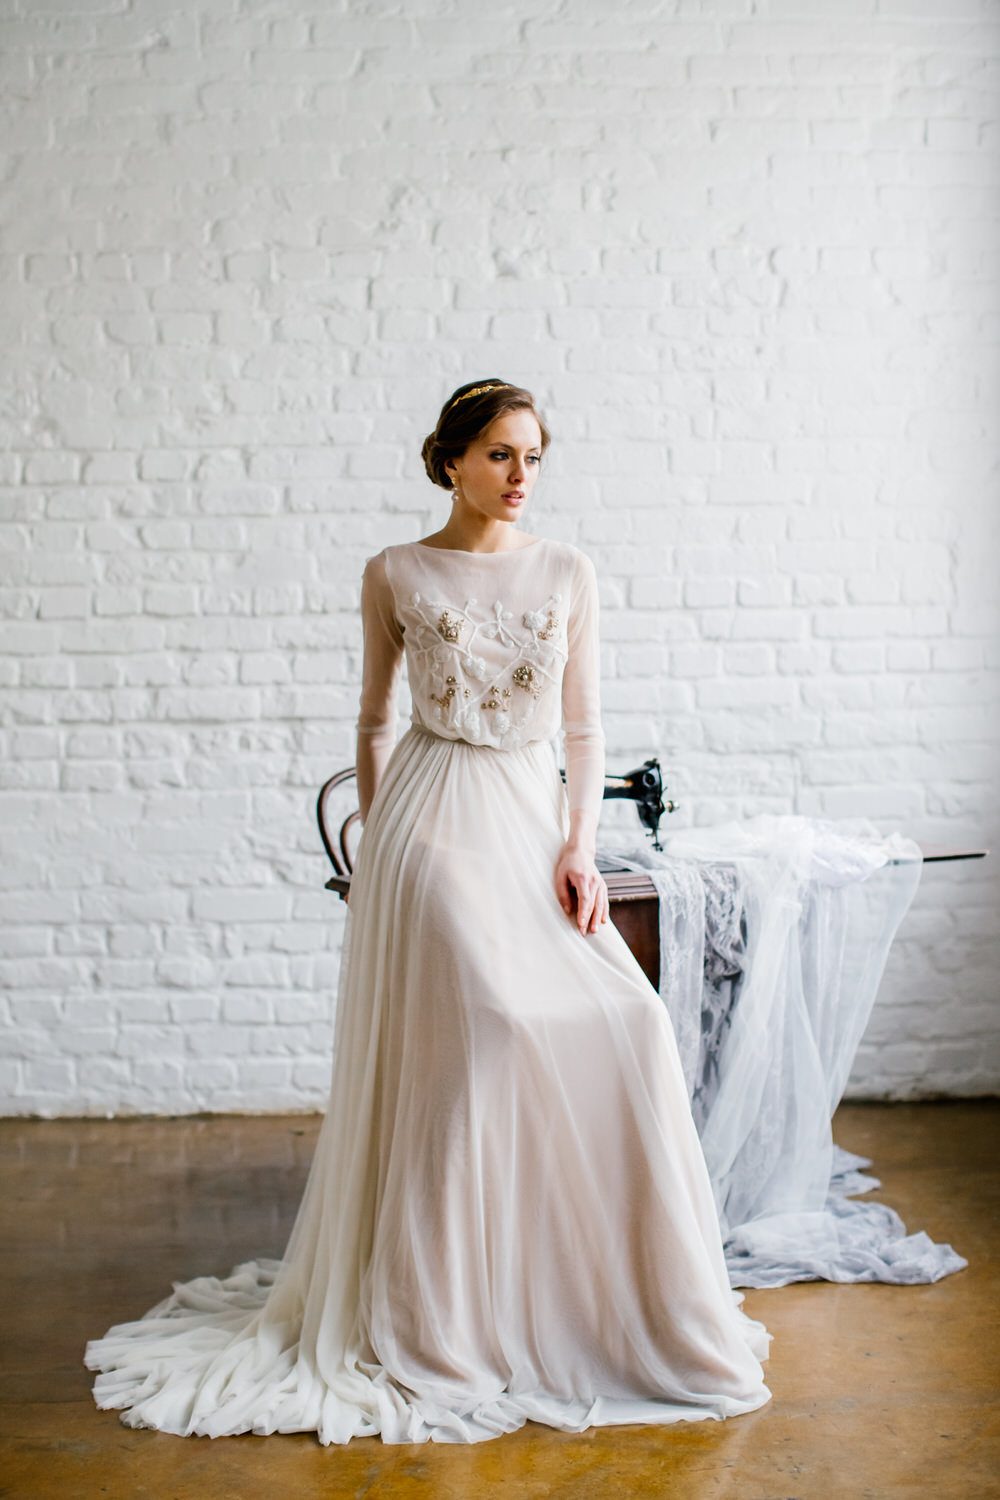 An Etsy wedding dress by Terri